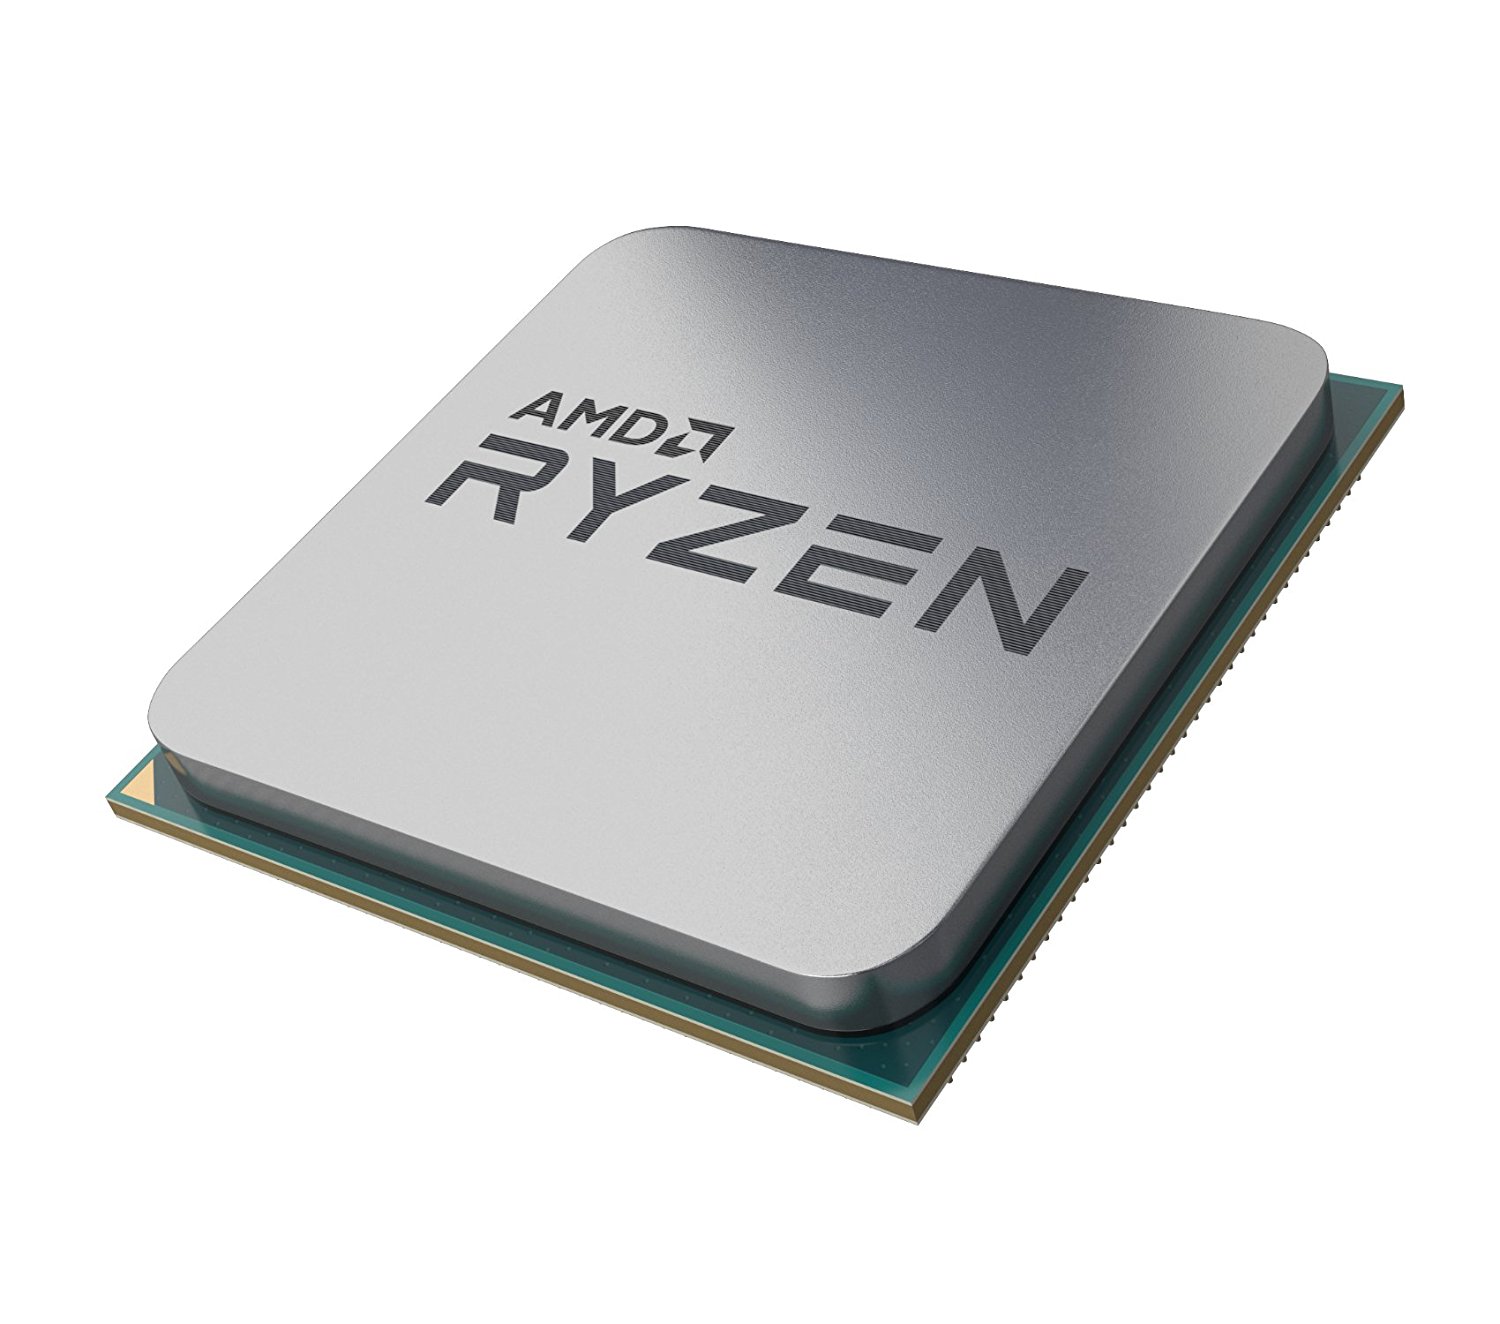 Media asset in full size related to 3dfxzone.it news item entitled as follows: AMD lancia le APU Raven Ridge per desktop Ryzen 5 2400G e Ryzen 3 2200G | Image Name: news27852_Ryzen-5-2400G-Ryzen-3-2200G_6.jpg